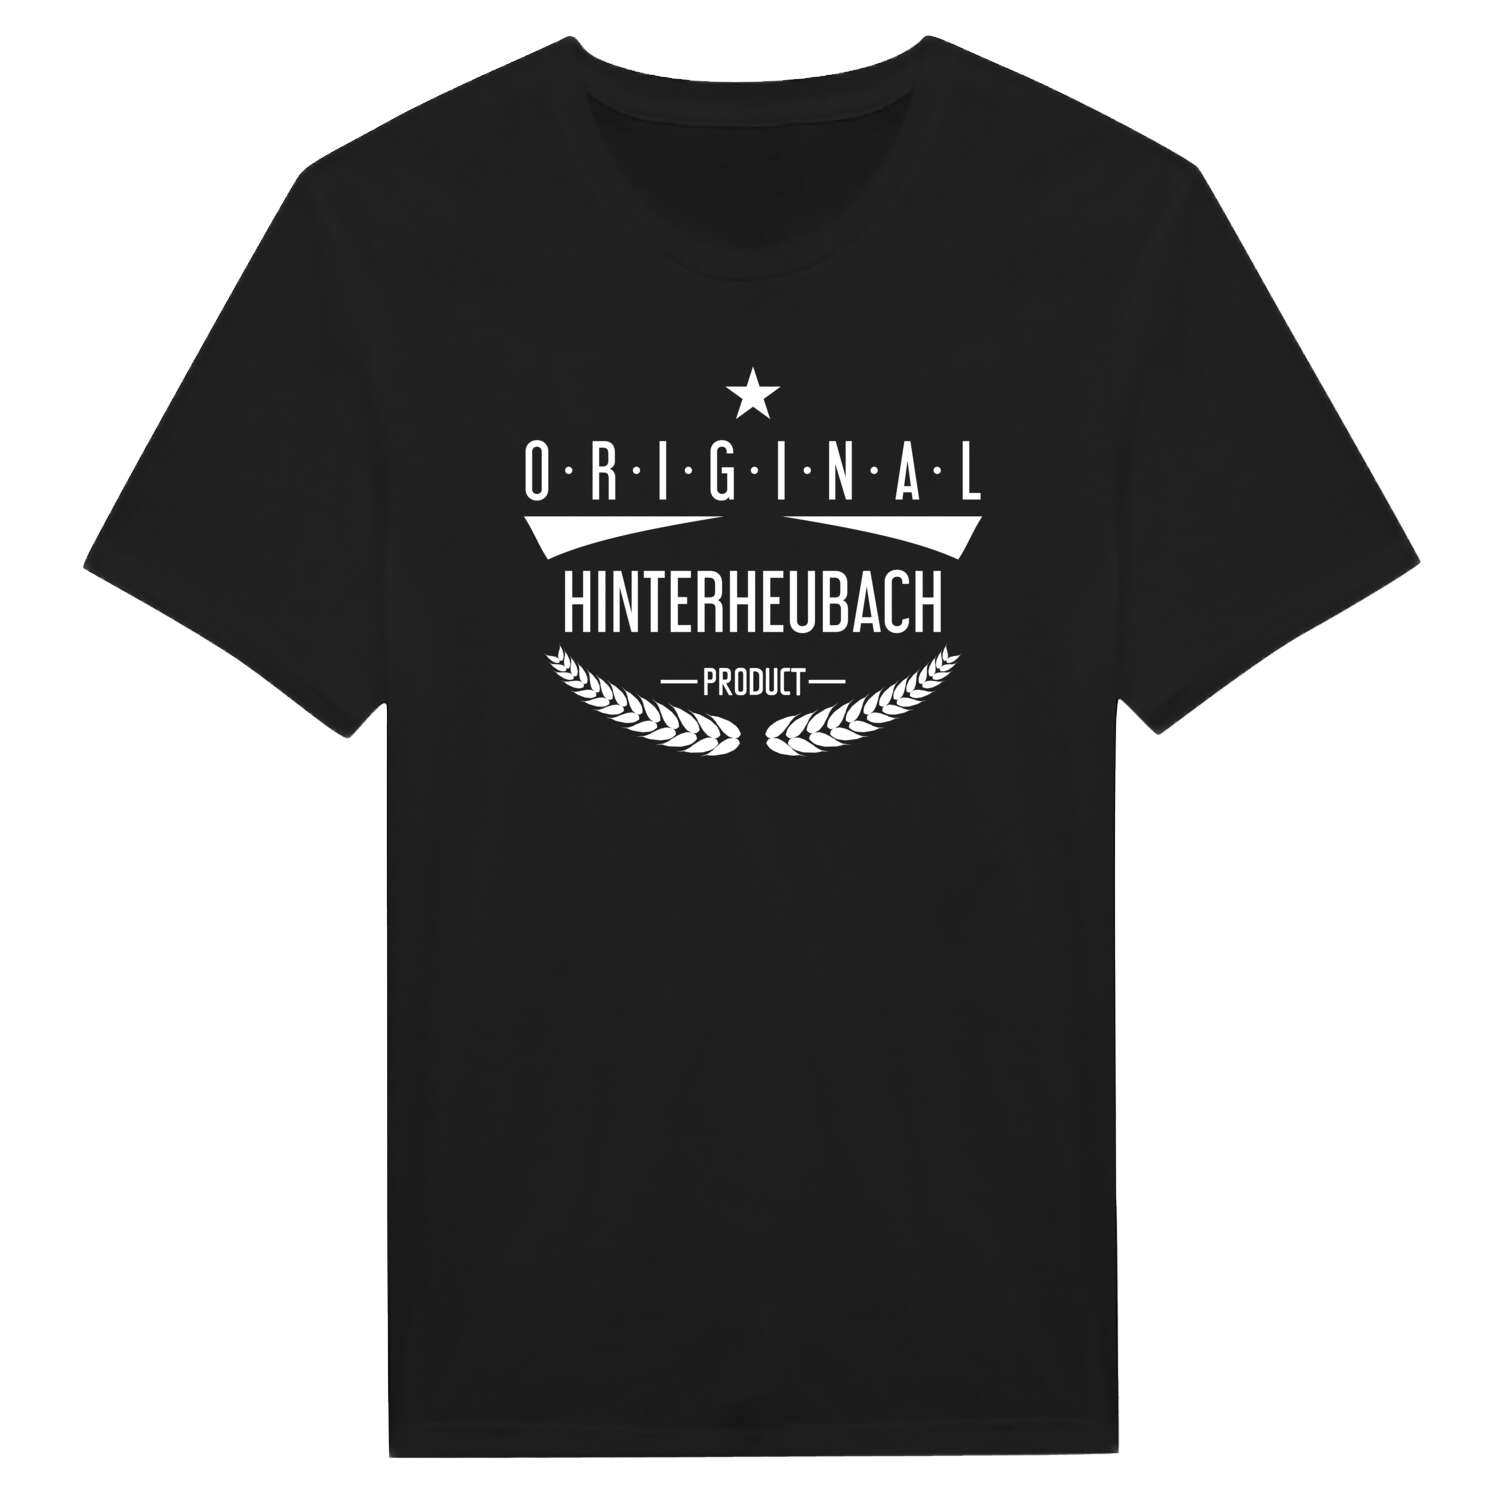 Hinterheubach T-Shirt »Original Product«